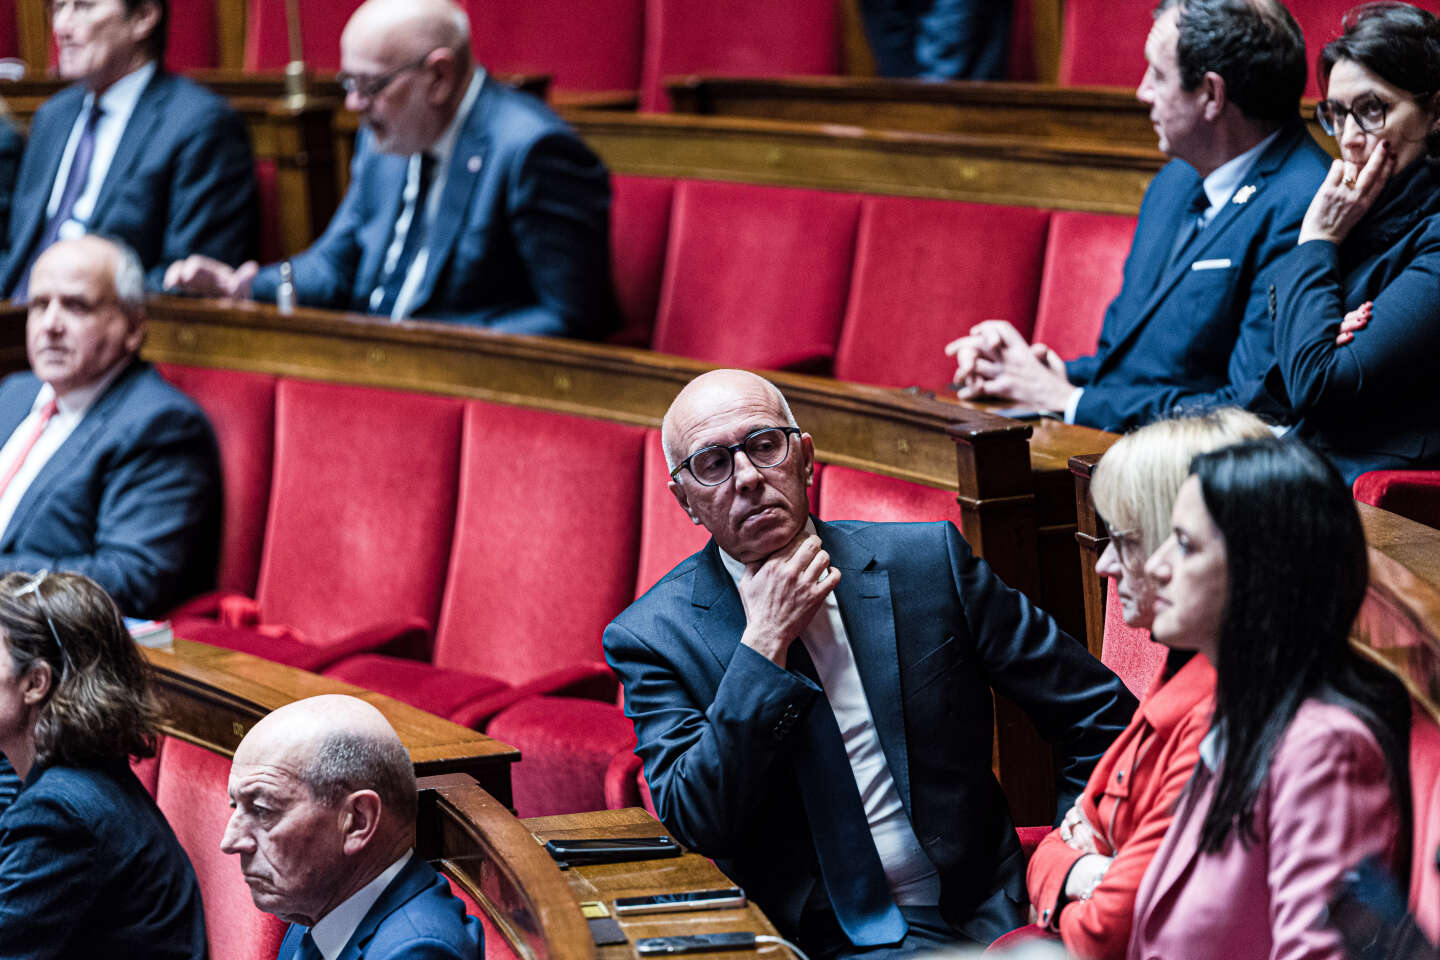 The pension reform highlights the deep fractures at Les Républicains